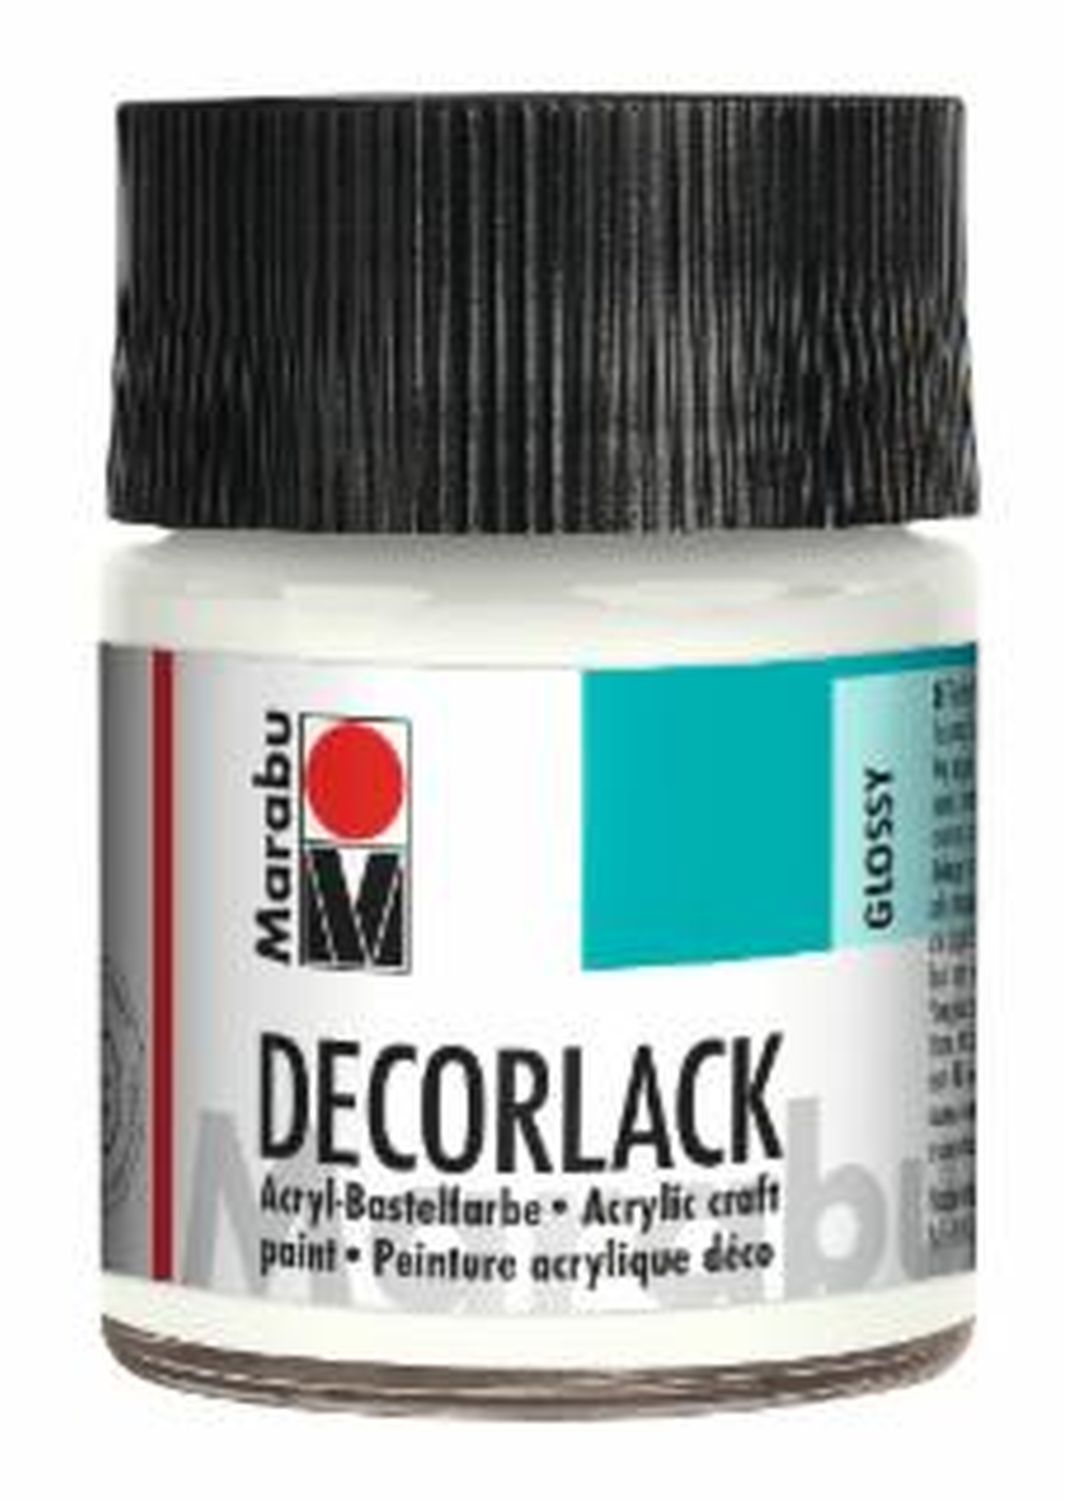 Decorlack Acryl - weiß 070, 50 ml